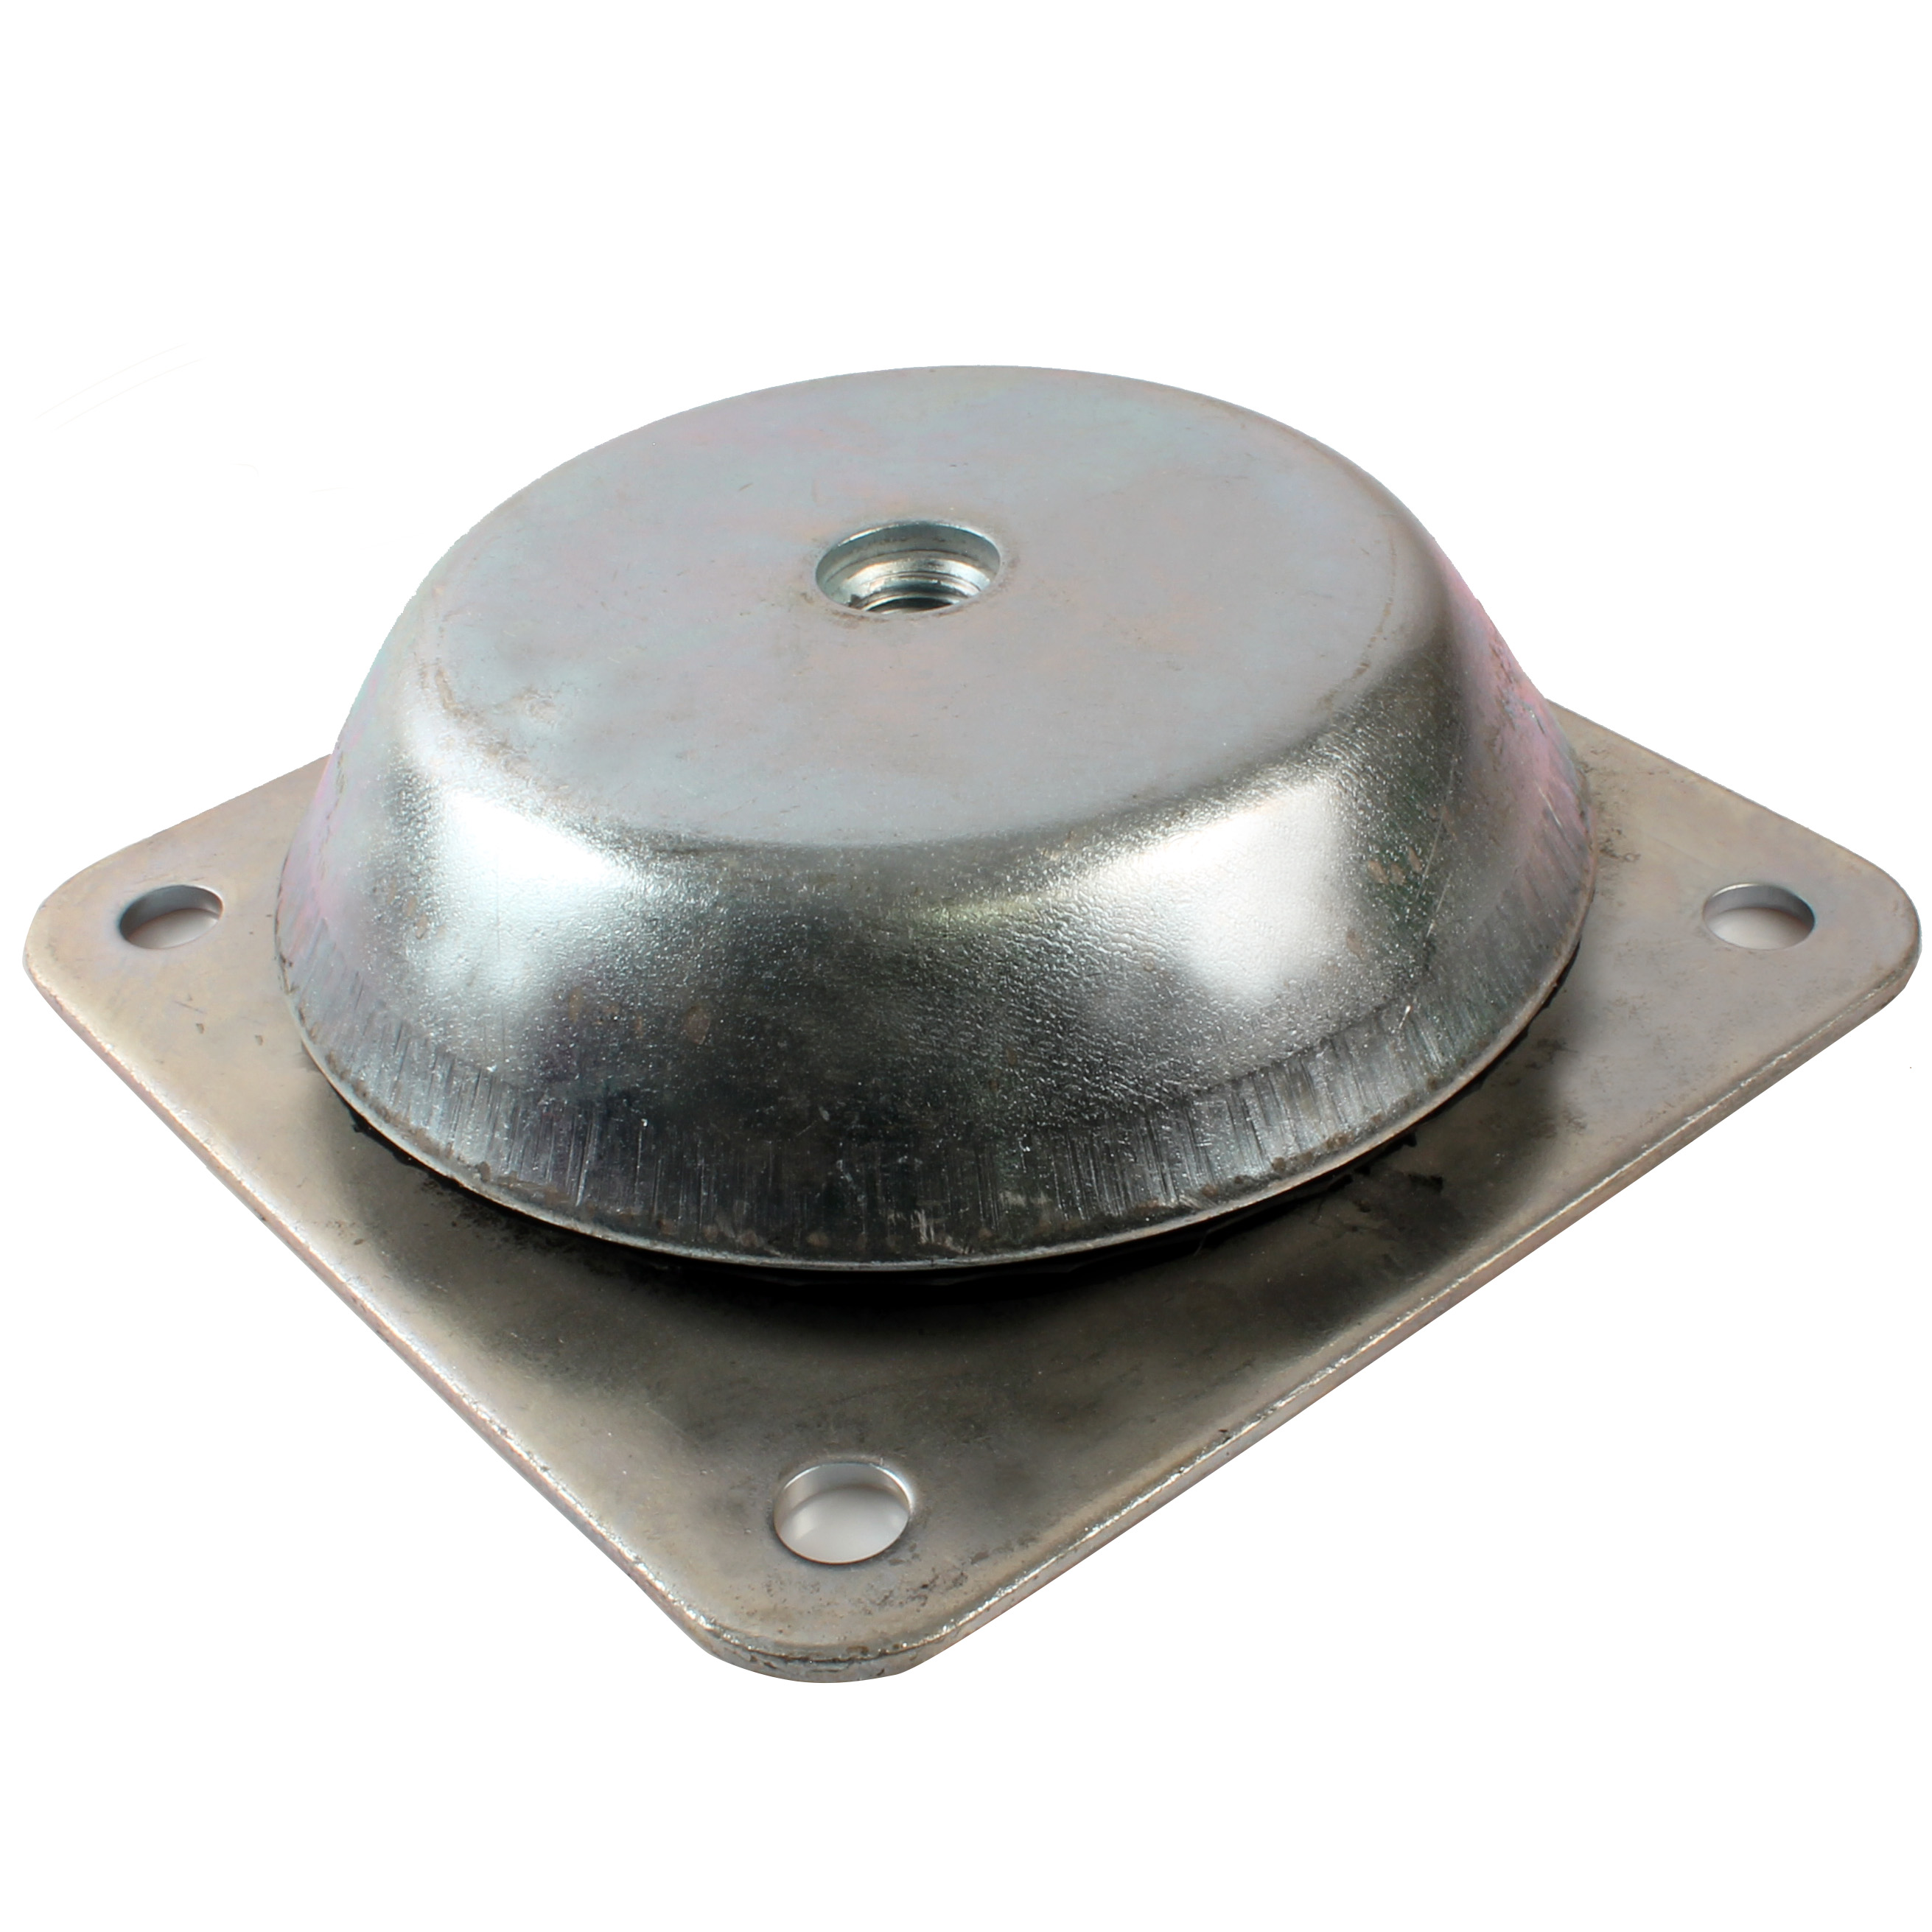 Anti-vibration machine mount - Square base plate - 4 fixing holes - 